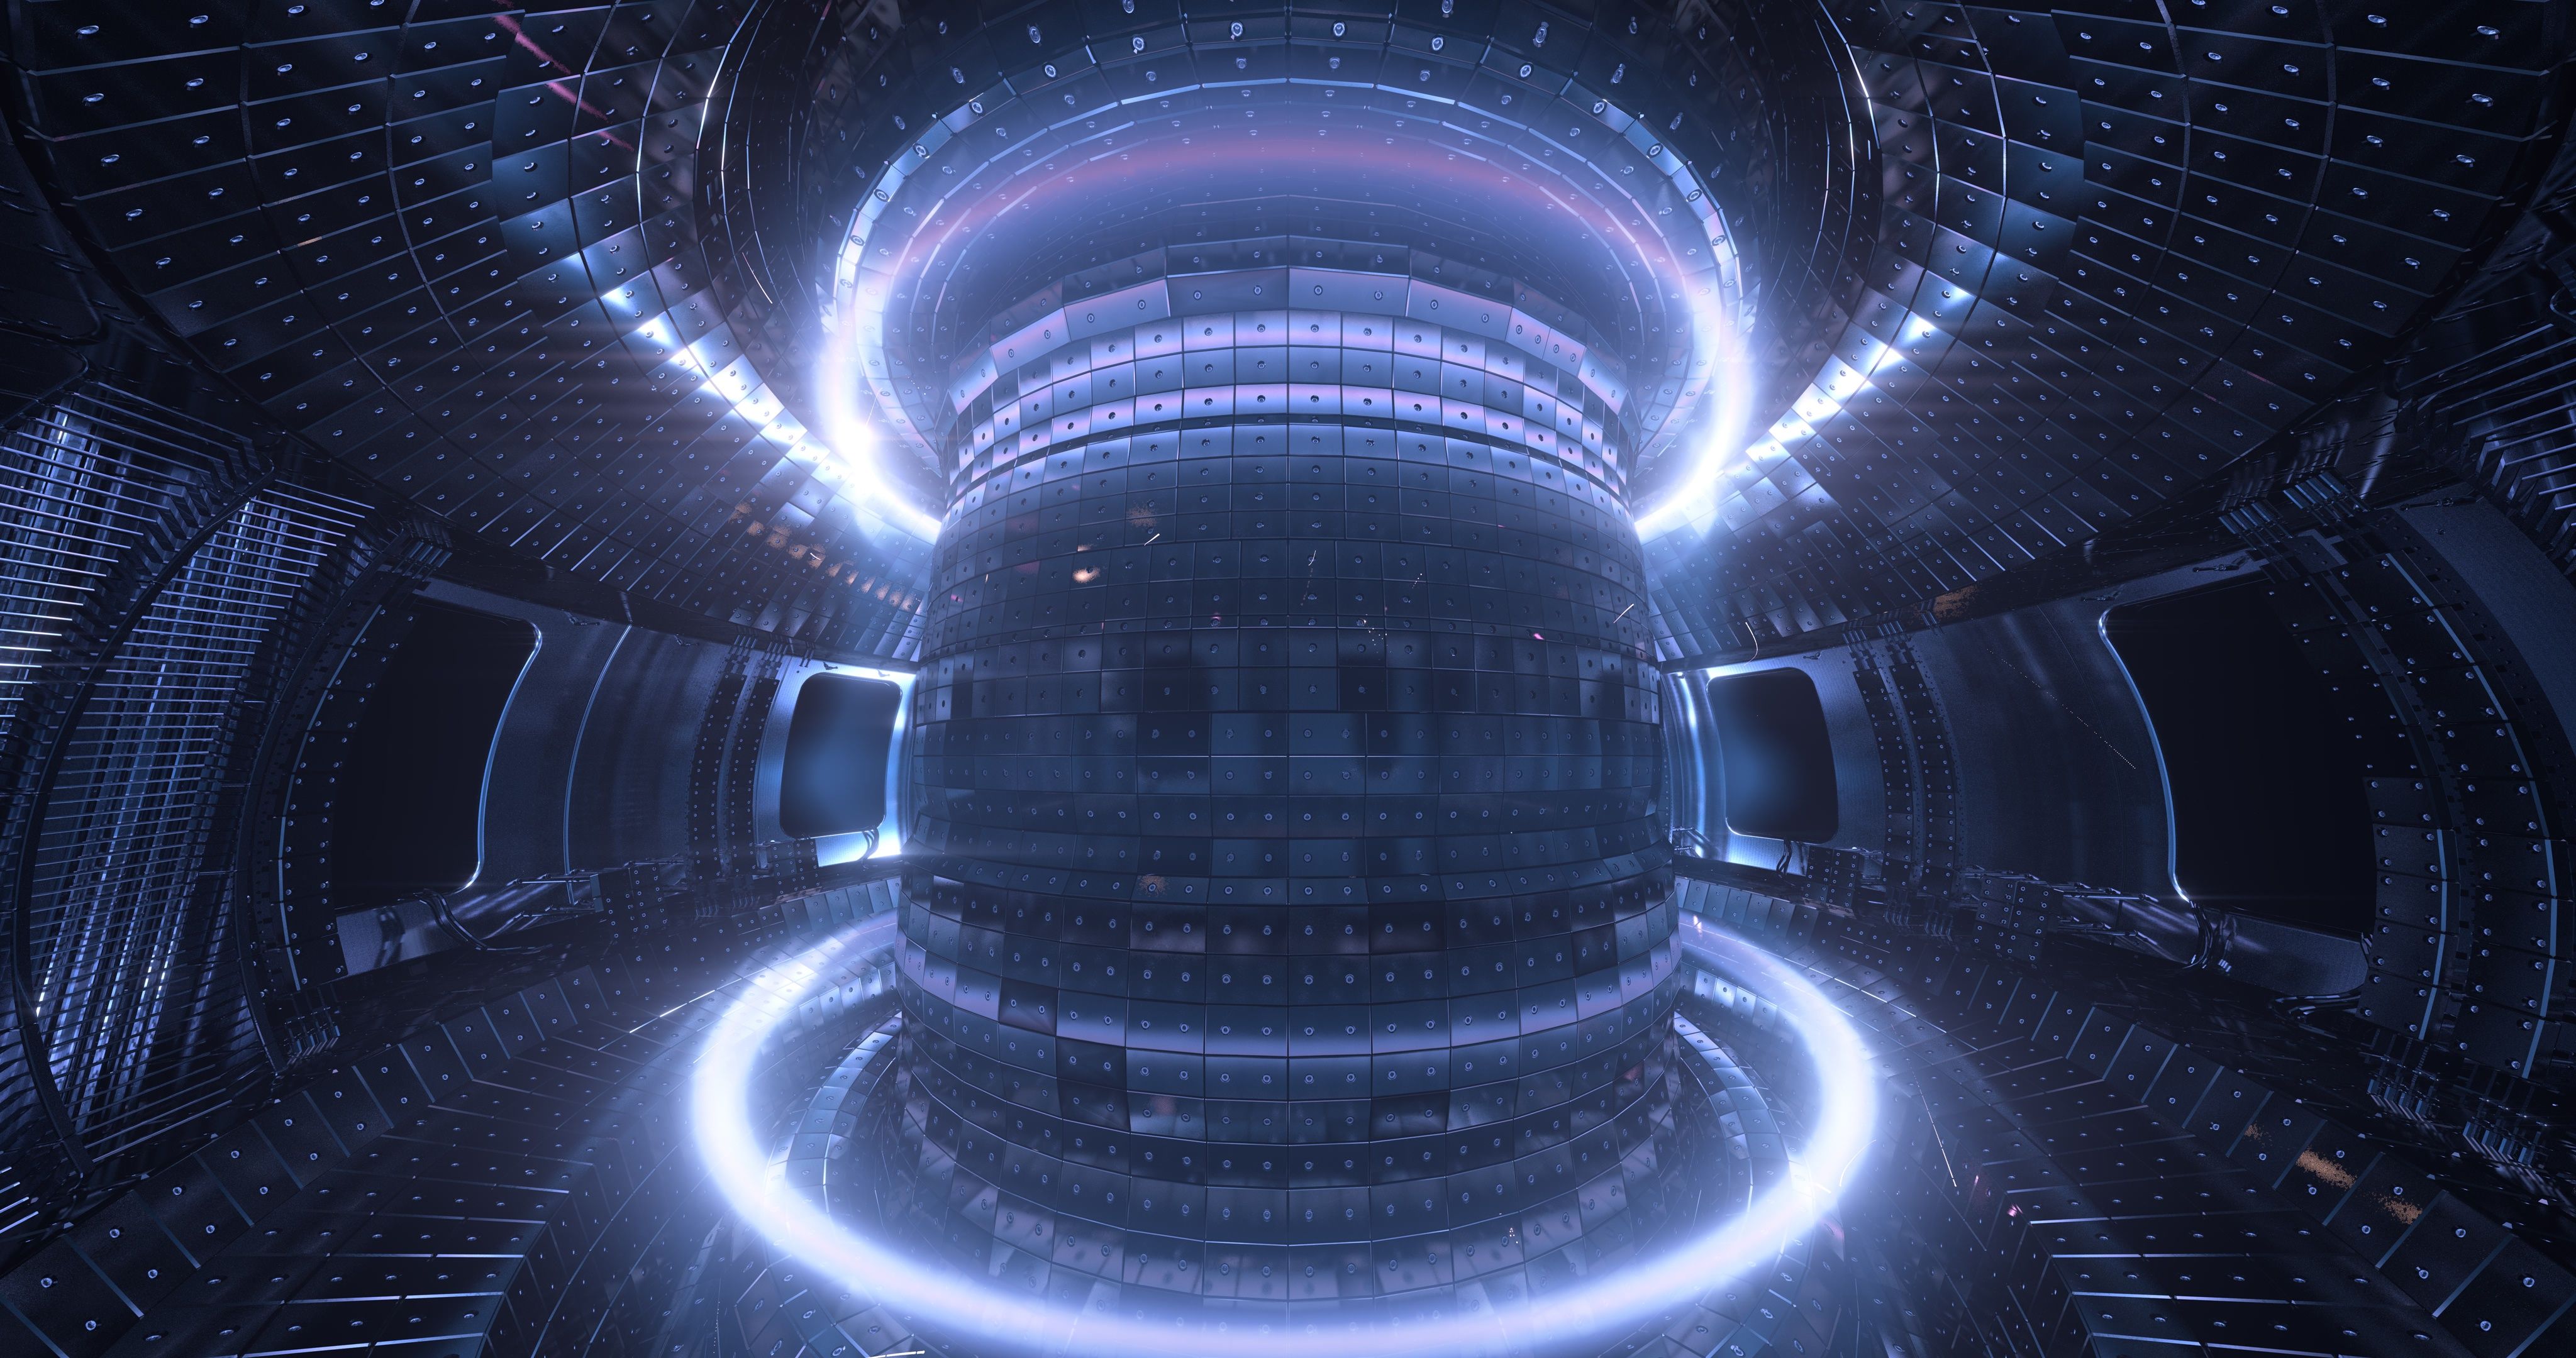 Fusion reactor.Plasma.Tokamak.Reaction chamber.Fusion power.Seamless loop 4k UHD Stock Footage #AD ,. Alternative energy projects, Eerie places, Tesla technology